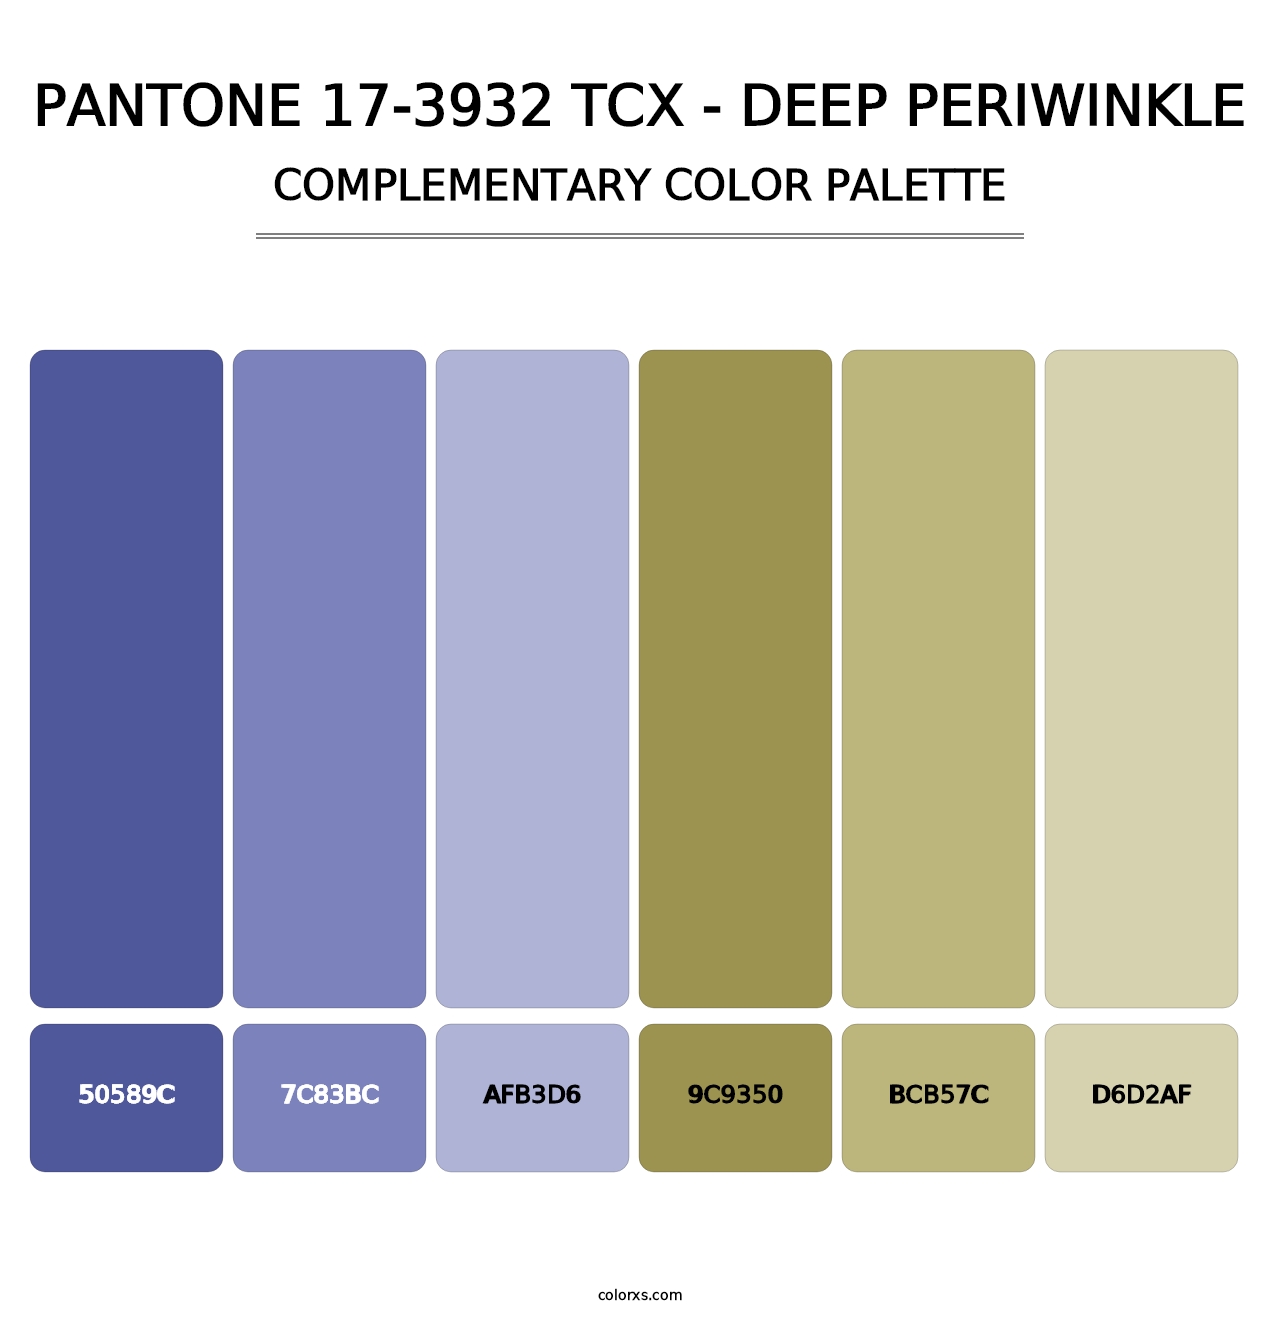 PANTONE 17-3932 TCX - Deep Periwinkle - Complementary Color Palette